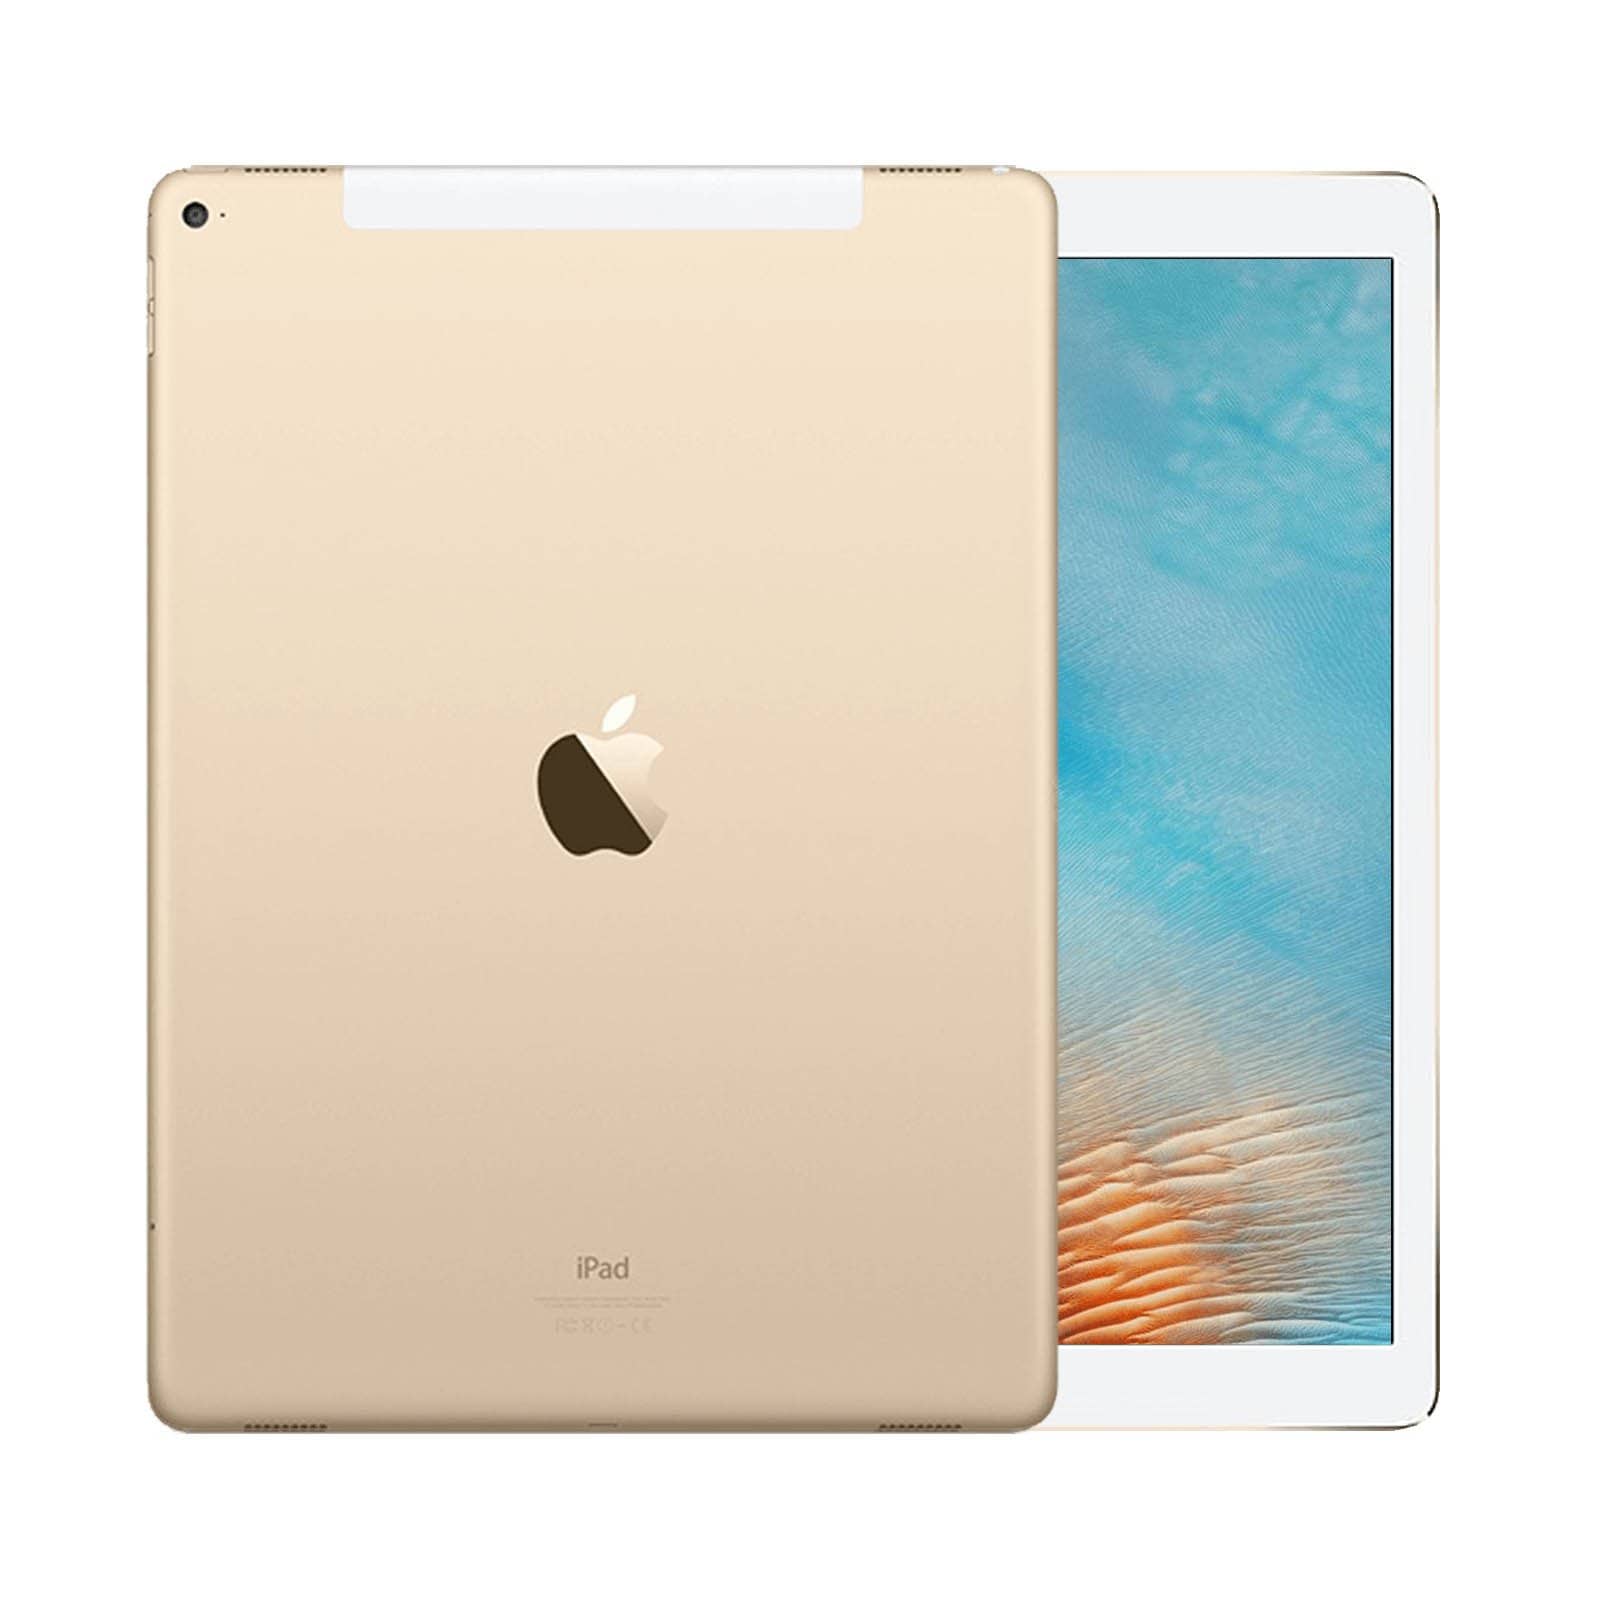 iPad Pro 12.9 Inch 2nd Gen 64GB Gold Good - Unlocked 64GB Gold Good